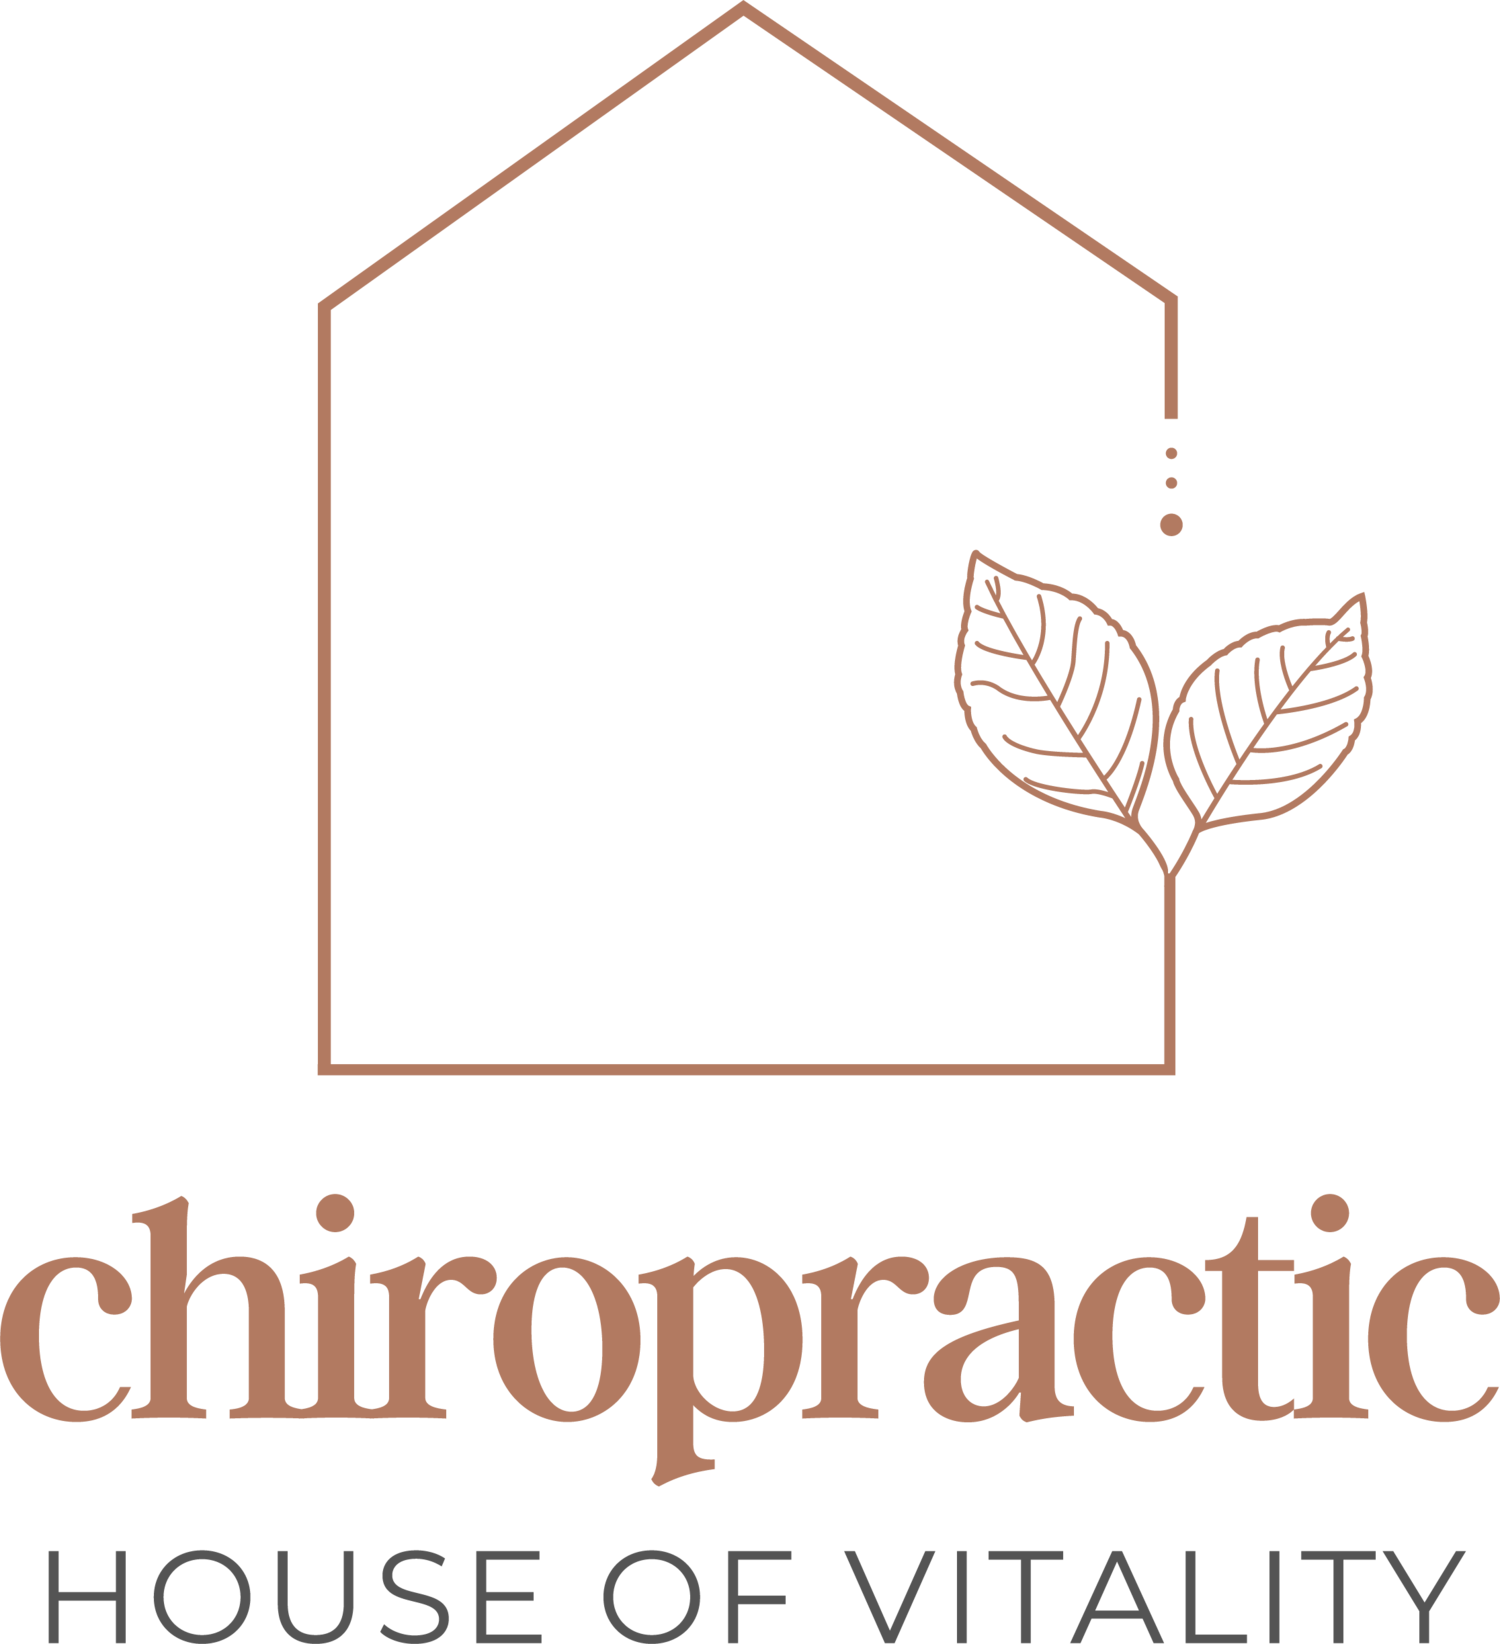 Chiropractic House of Vitality